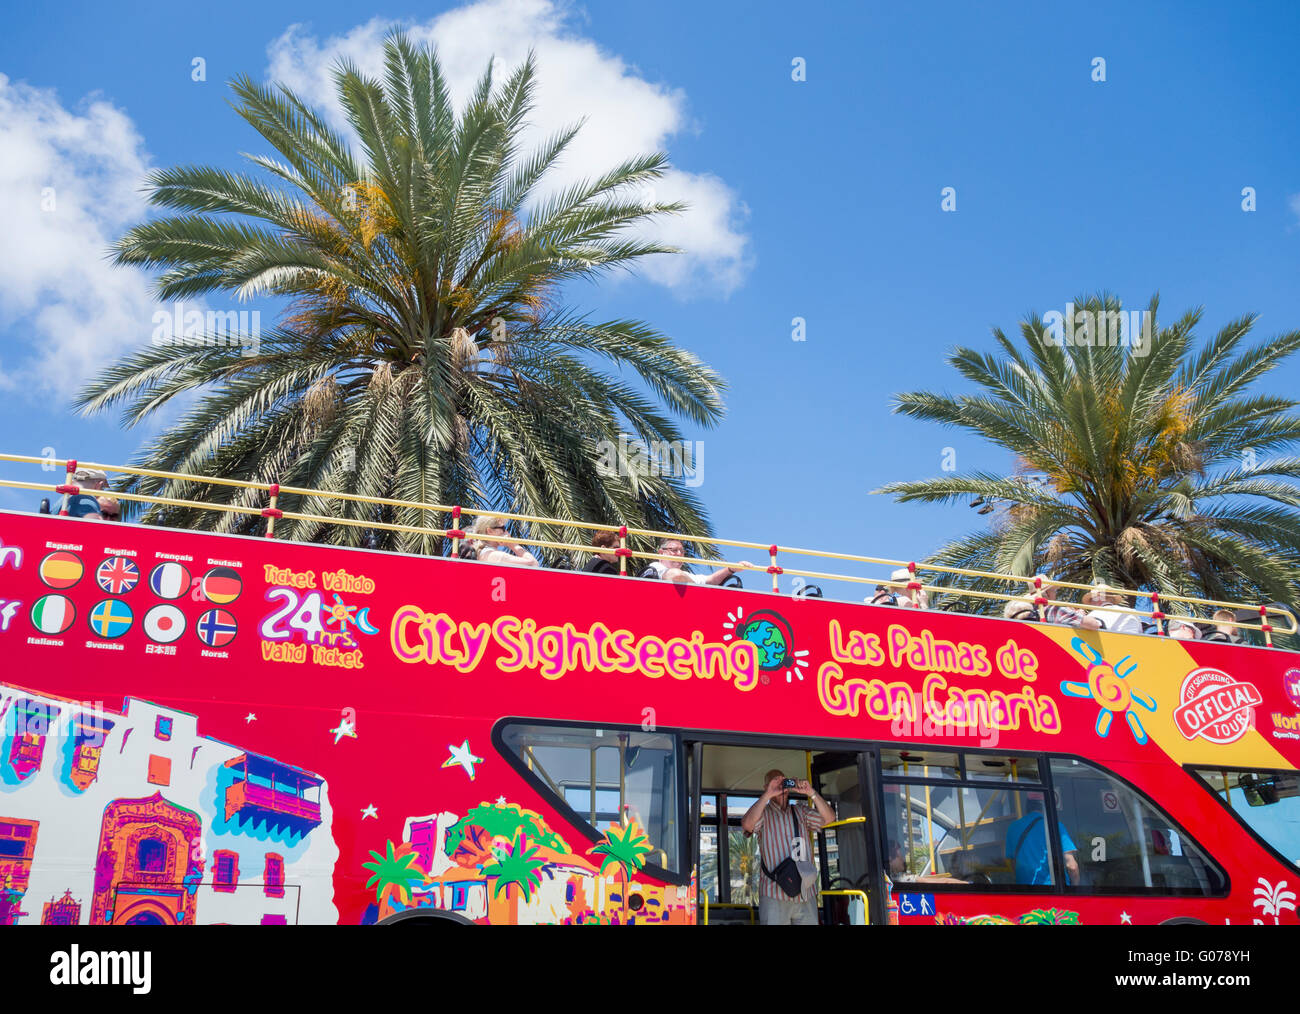 Open top city sightseeing bus in Parque Santa Catalina in Las Palmas, Gran Canaria, Canary Islands, Spain Stock Photo